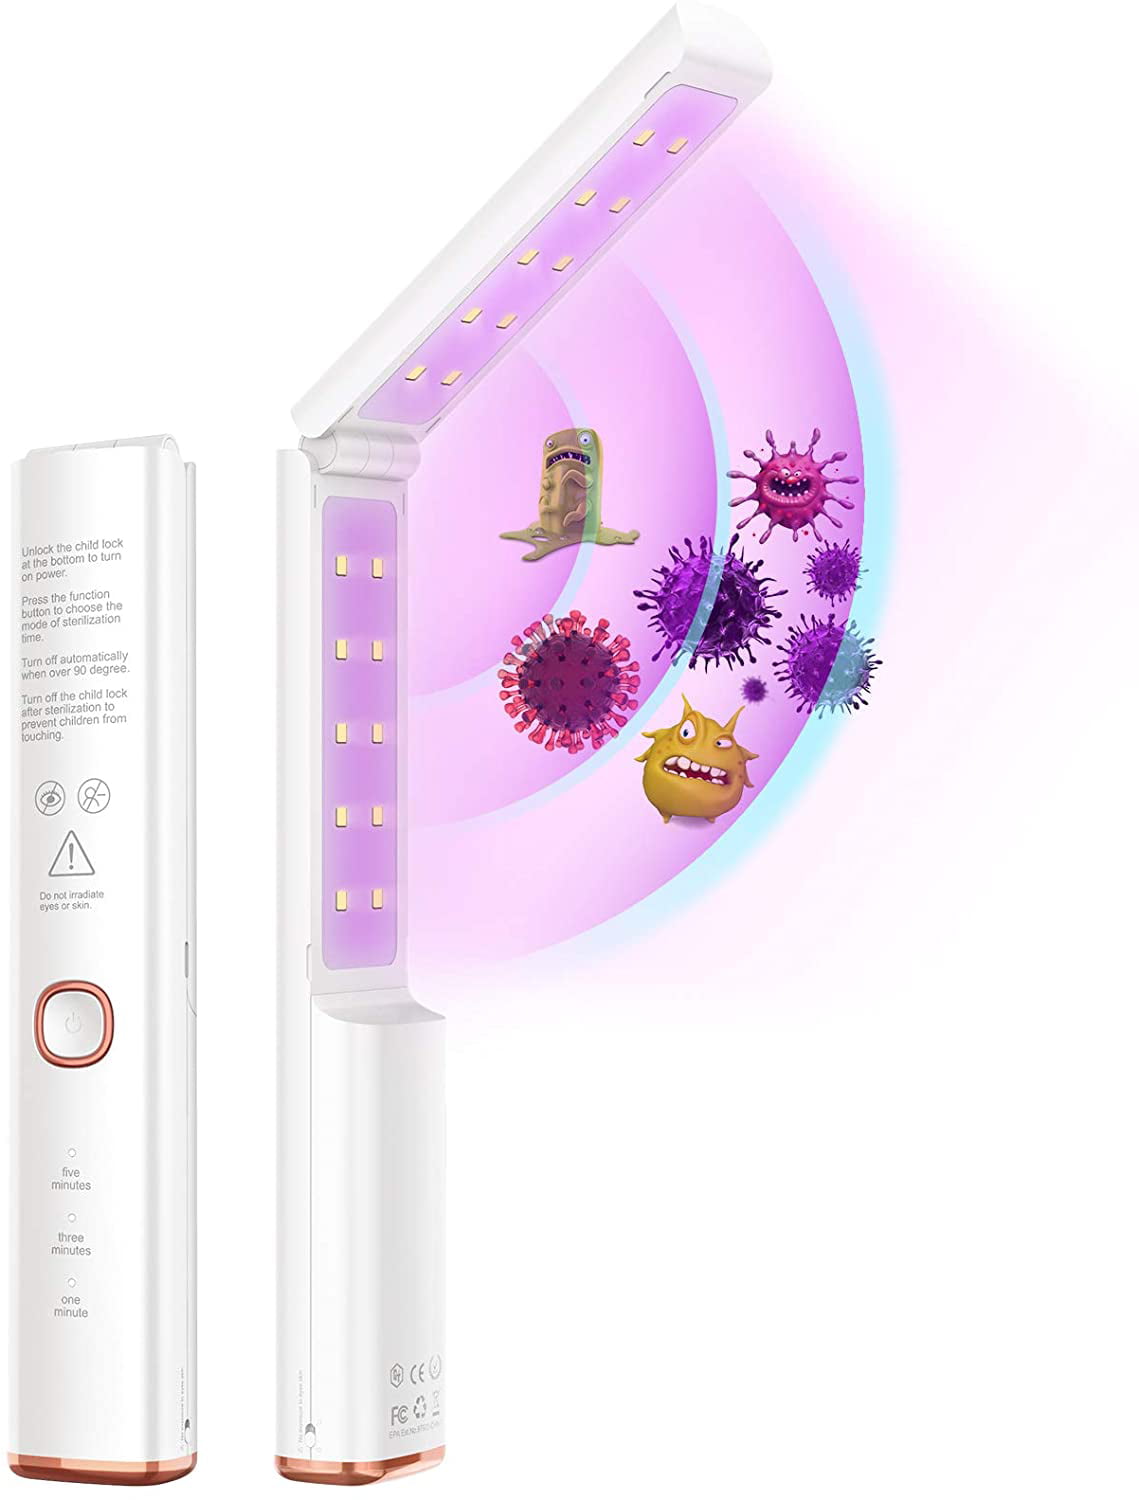 UV Handheld Steriliser Wand Kill Germs One Click Sterilisation Portable and Travel Ready Ozone Free